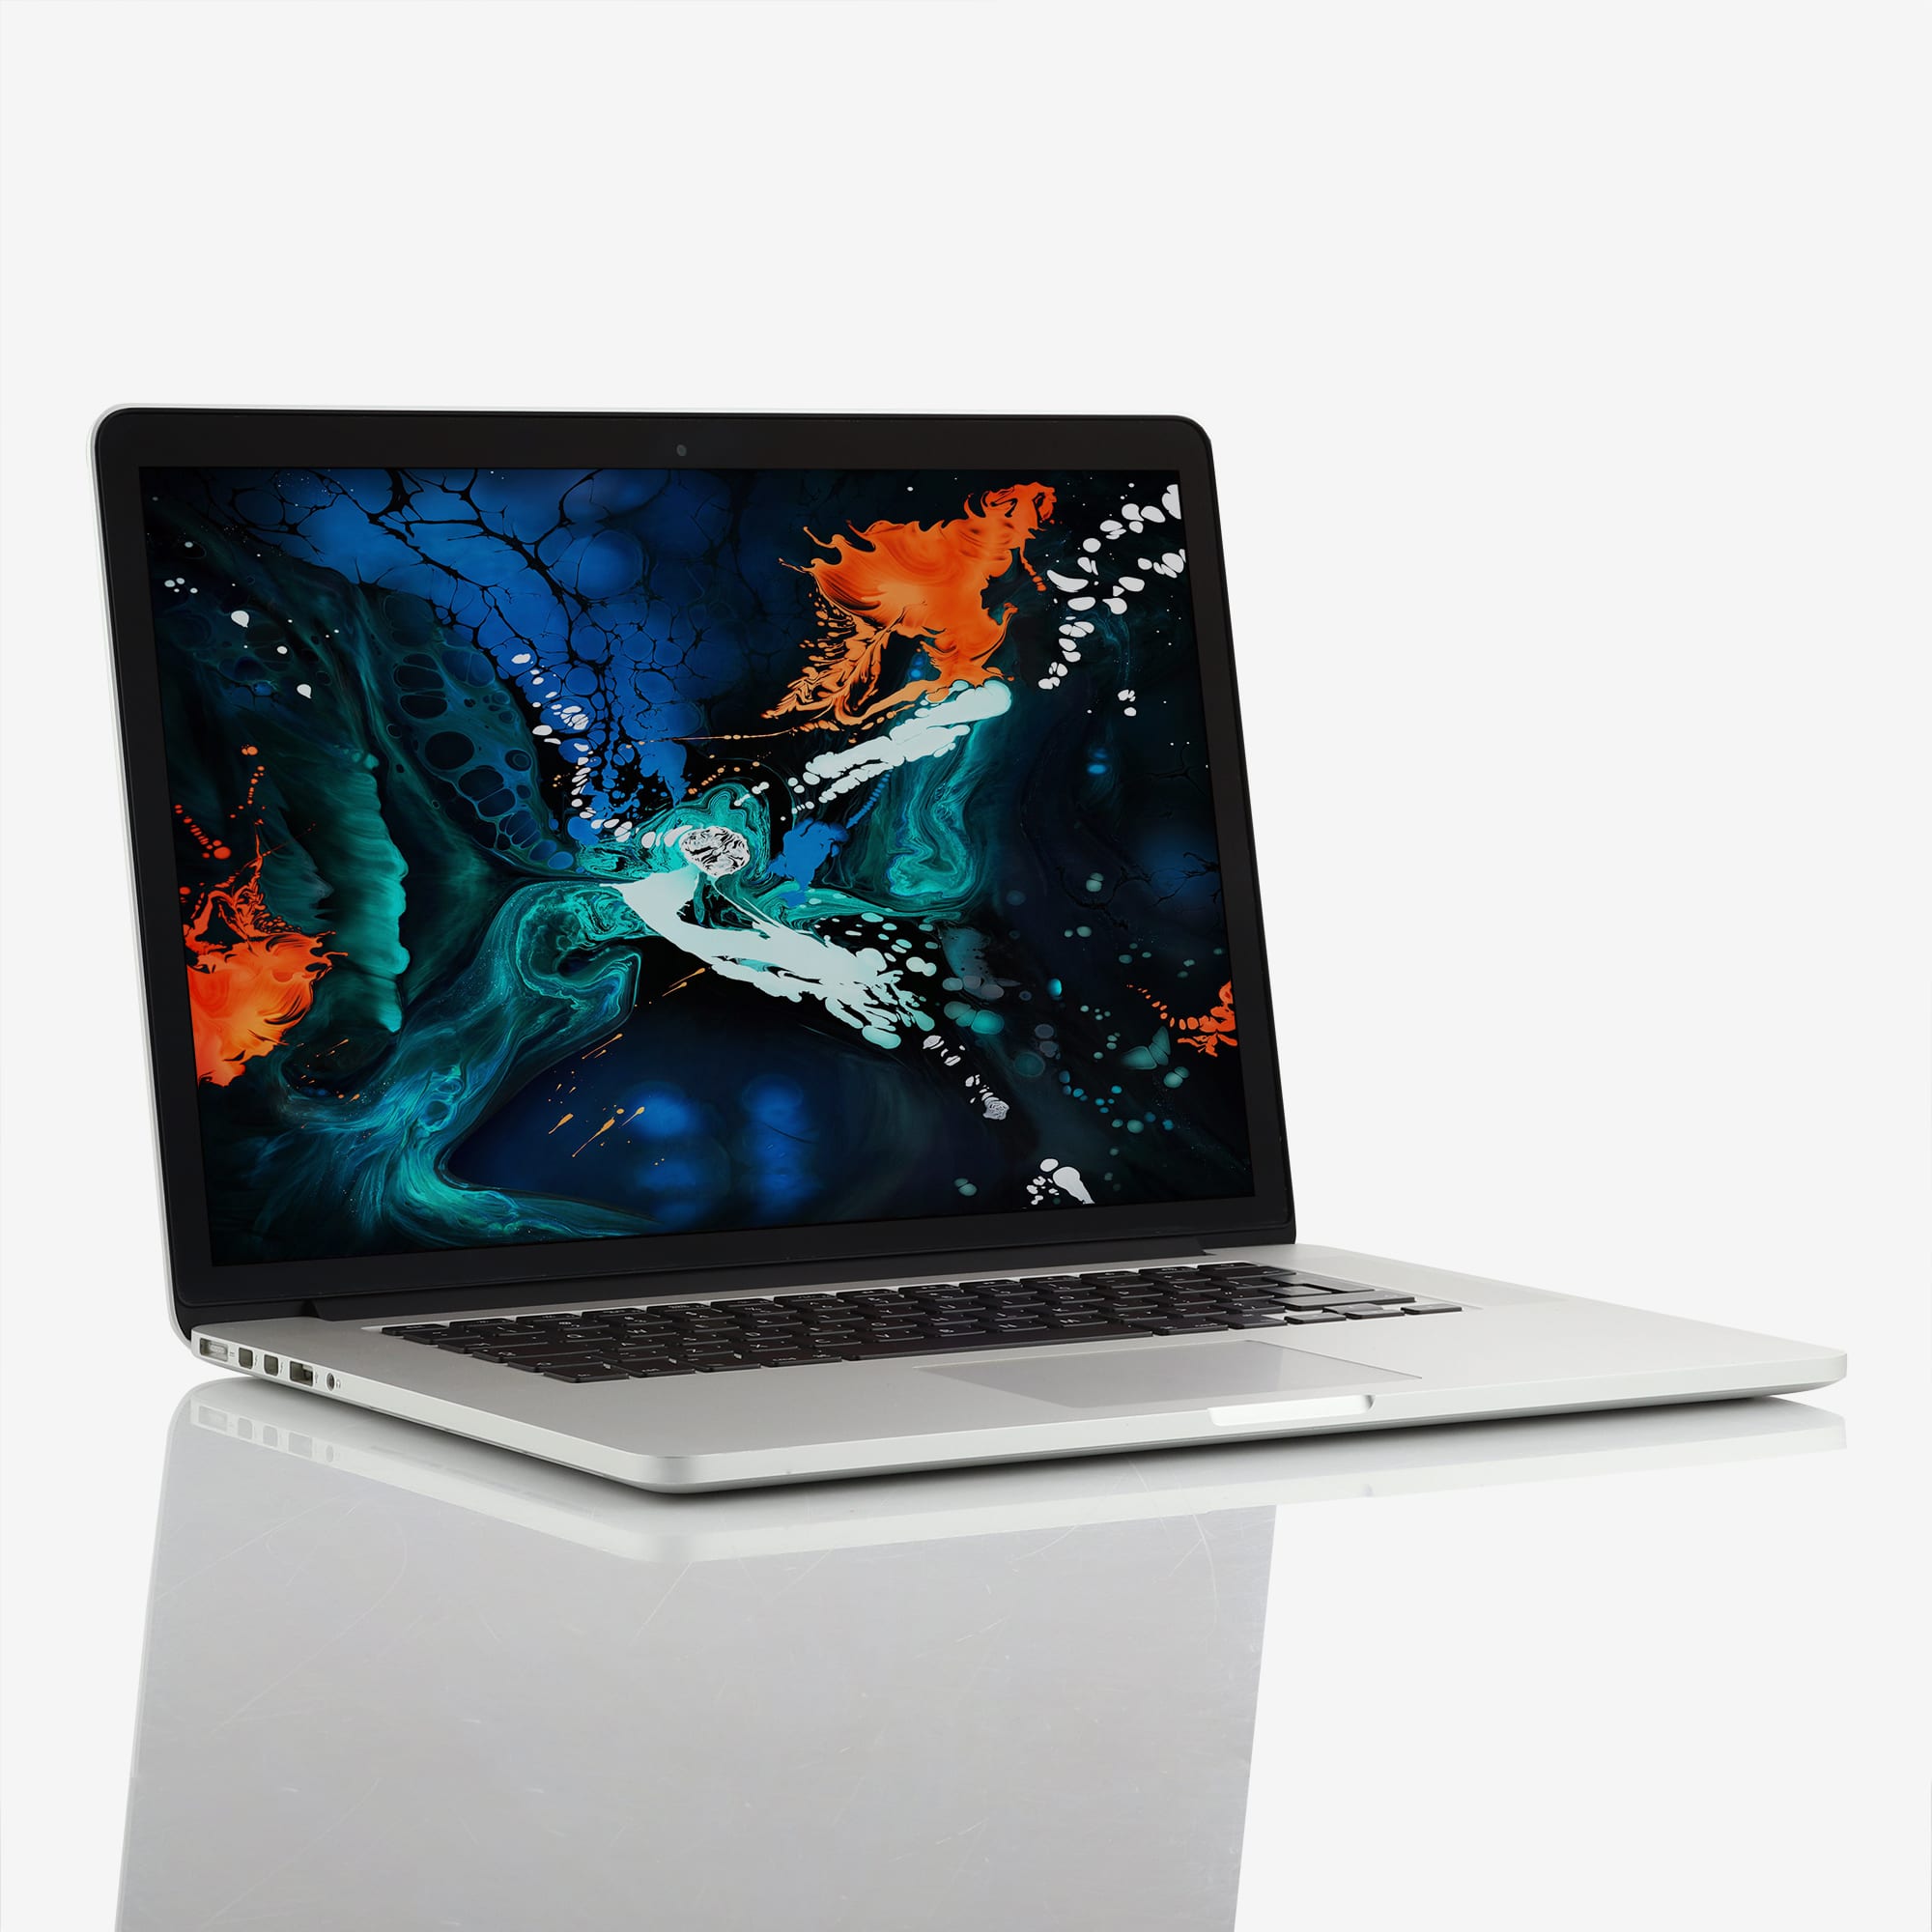 1 x Apple MacBook Pro Retina 15 Inch Quad Core i7 2.20 GHz (2015)